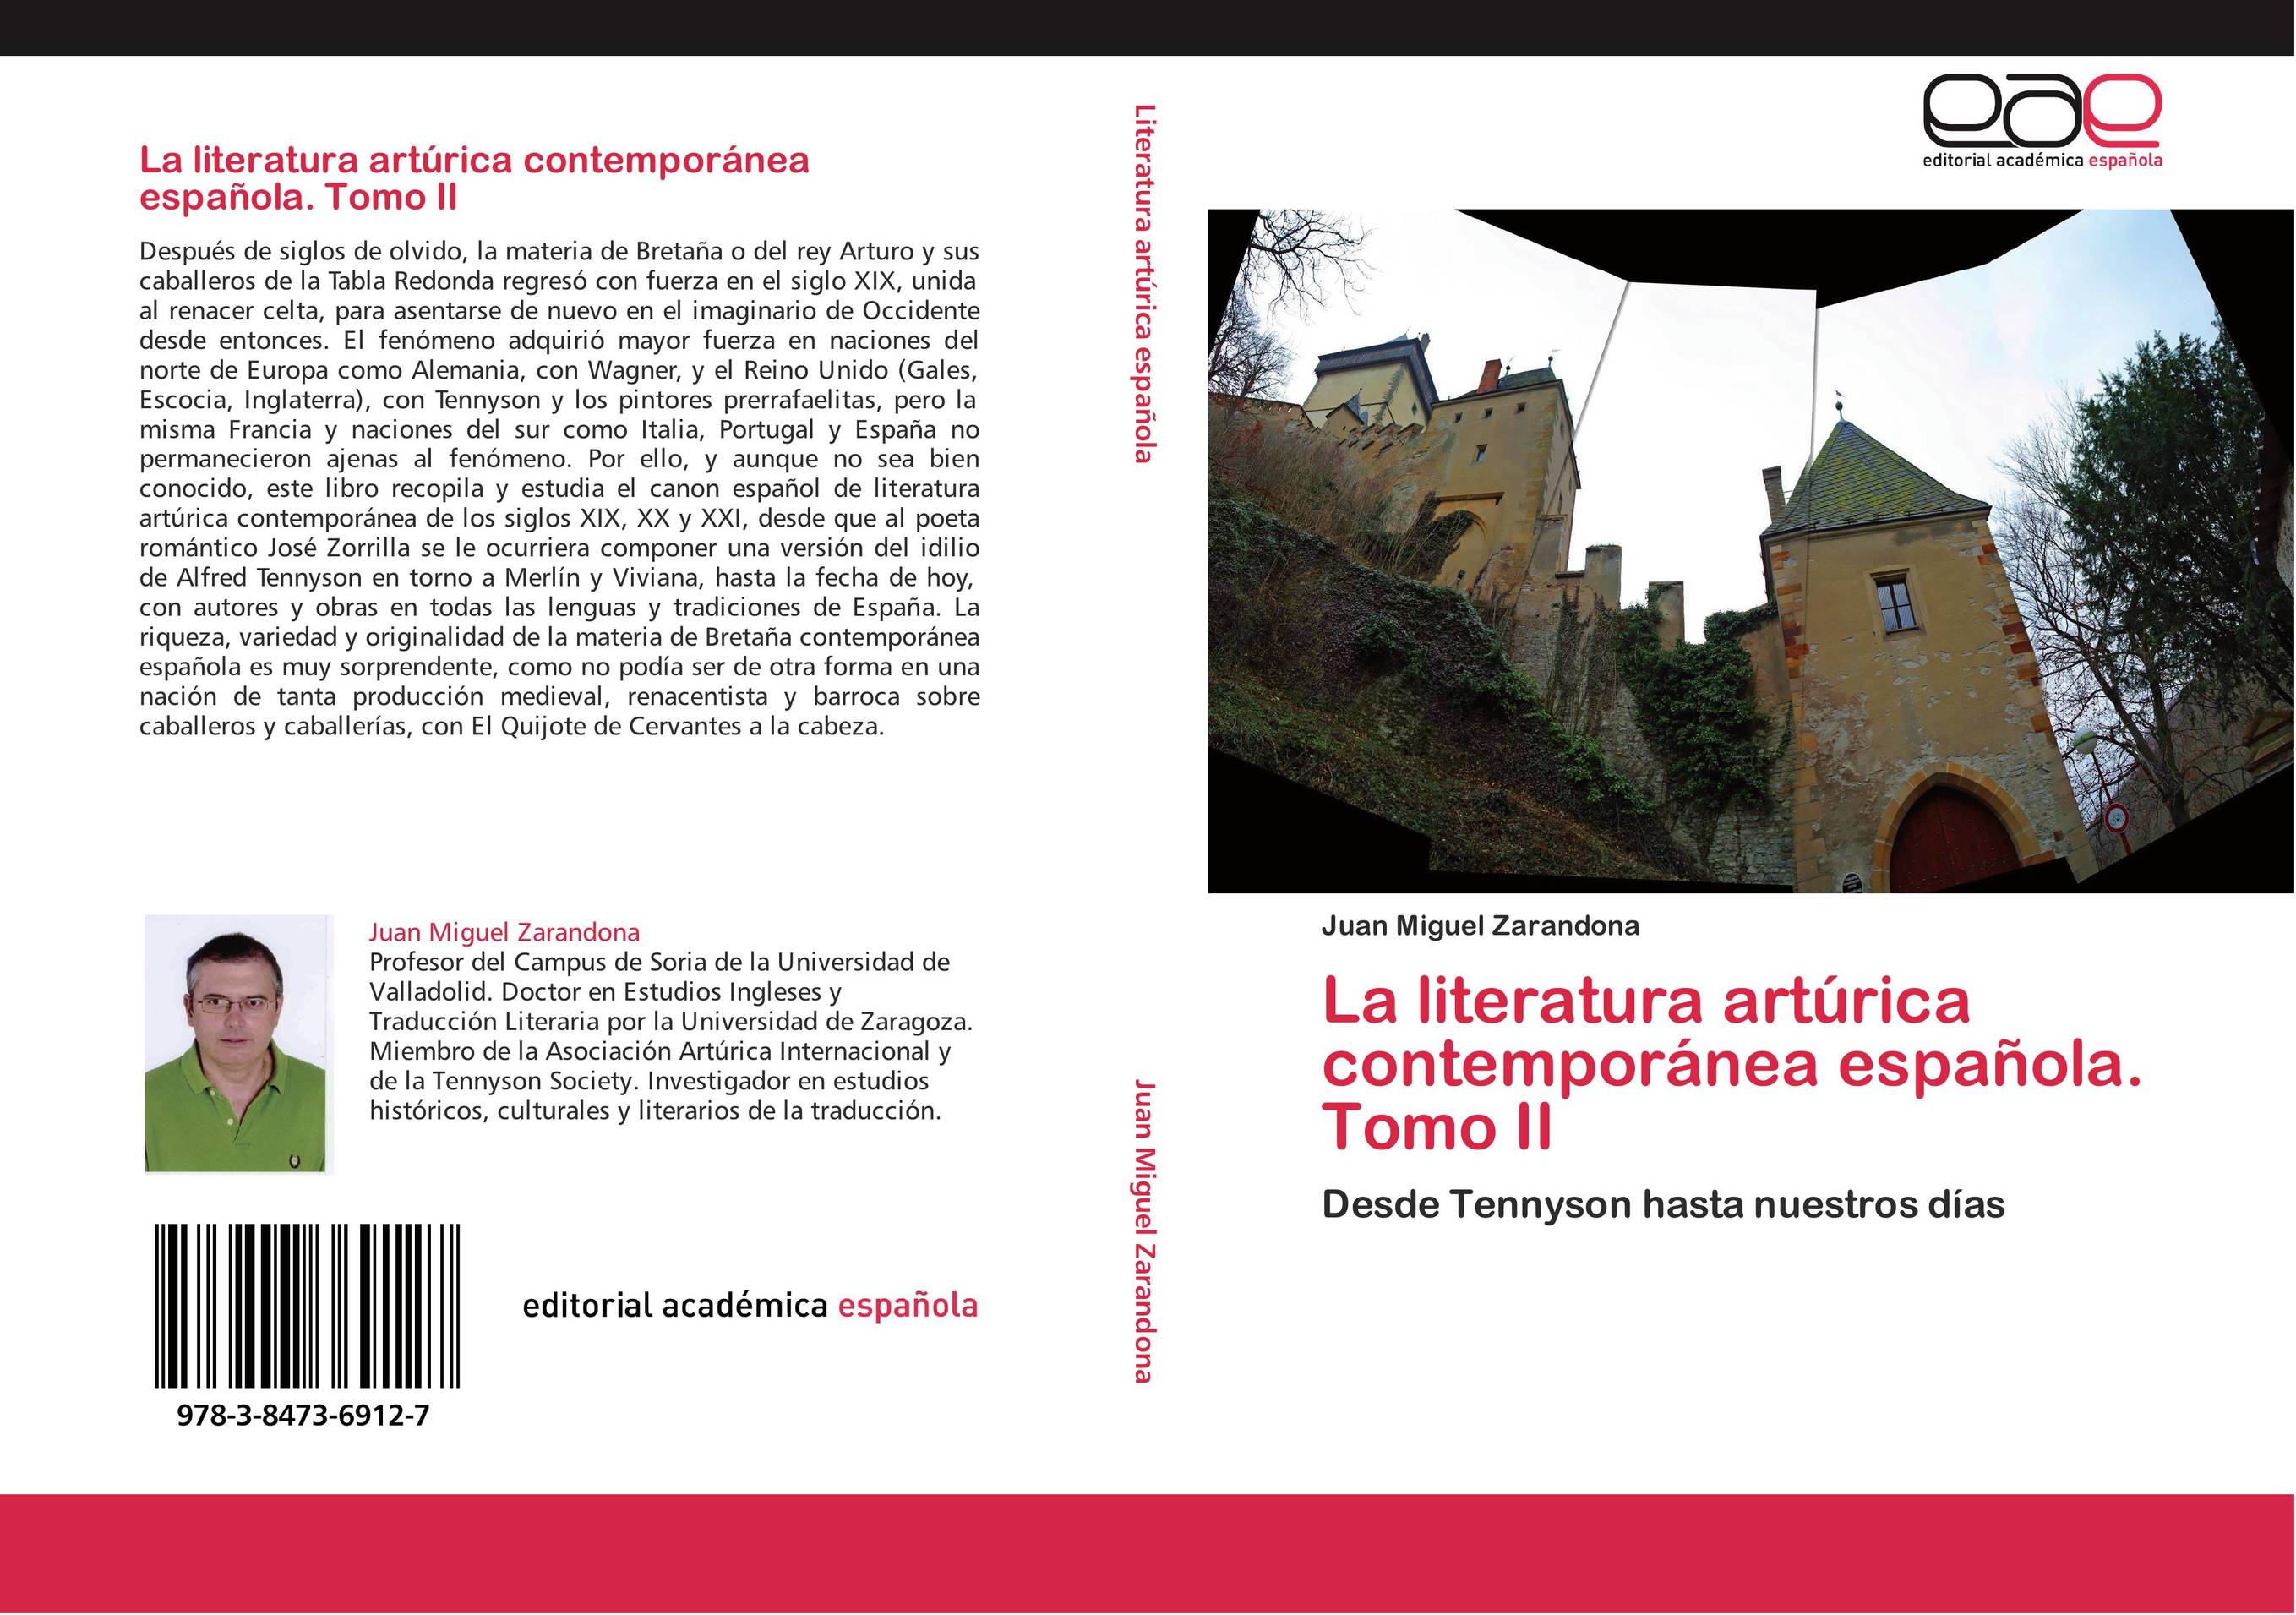 La literatura artúrica contemporánea española. Tomo II